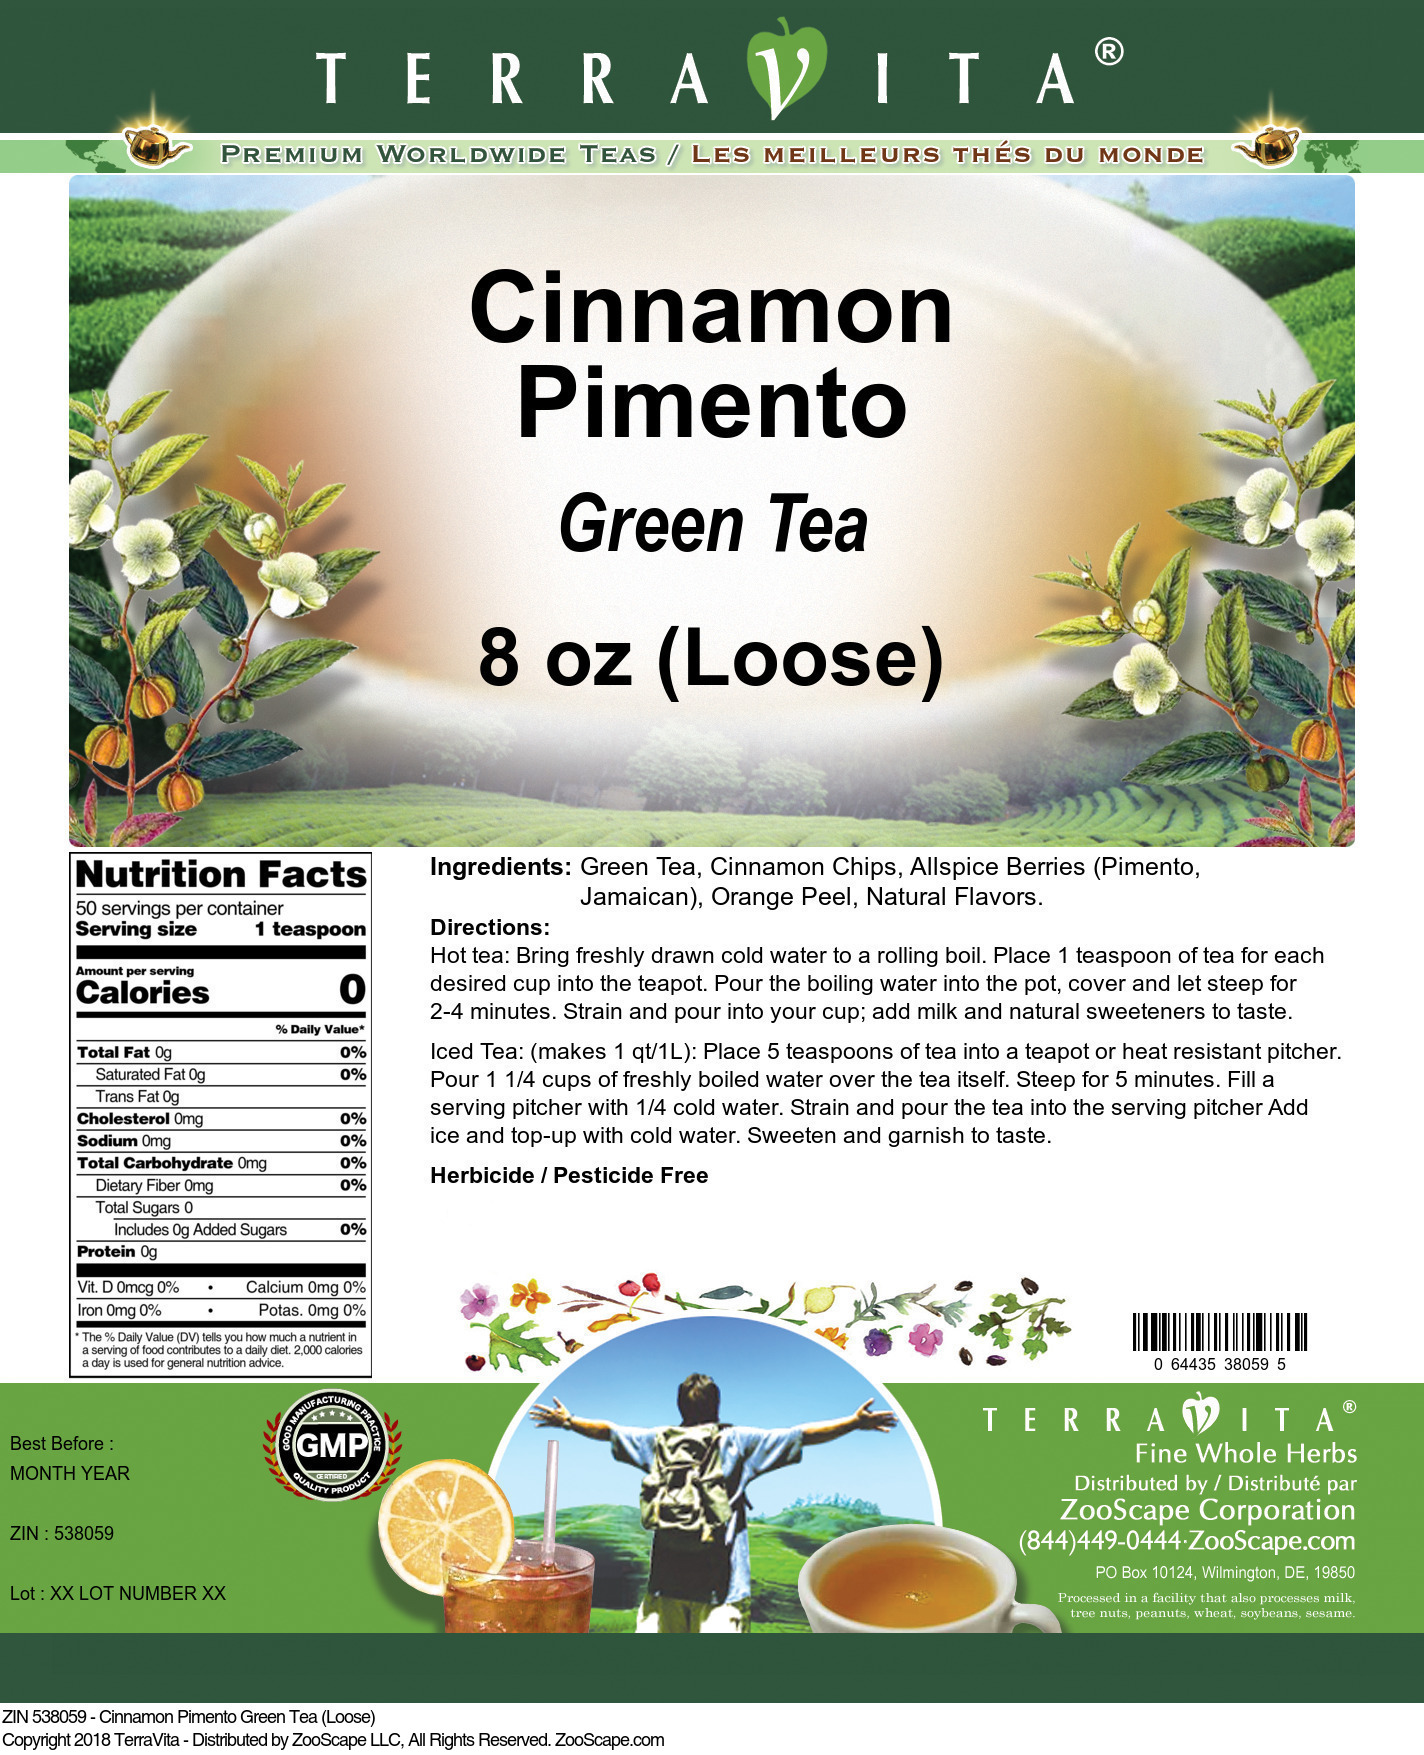 Cinnamon Pimento Green Tea (Loose) - Label